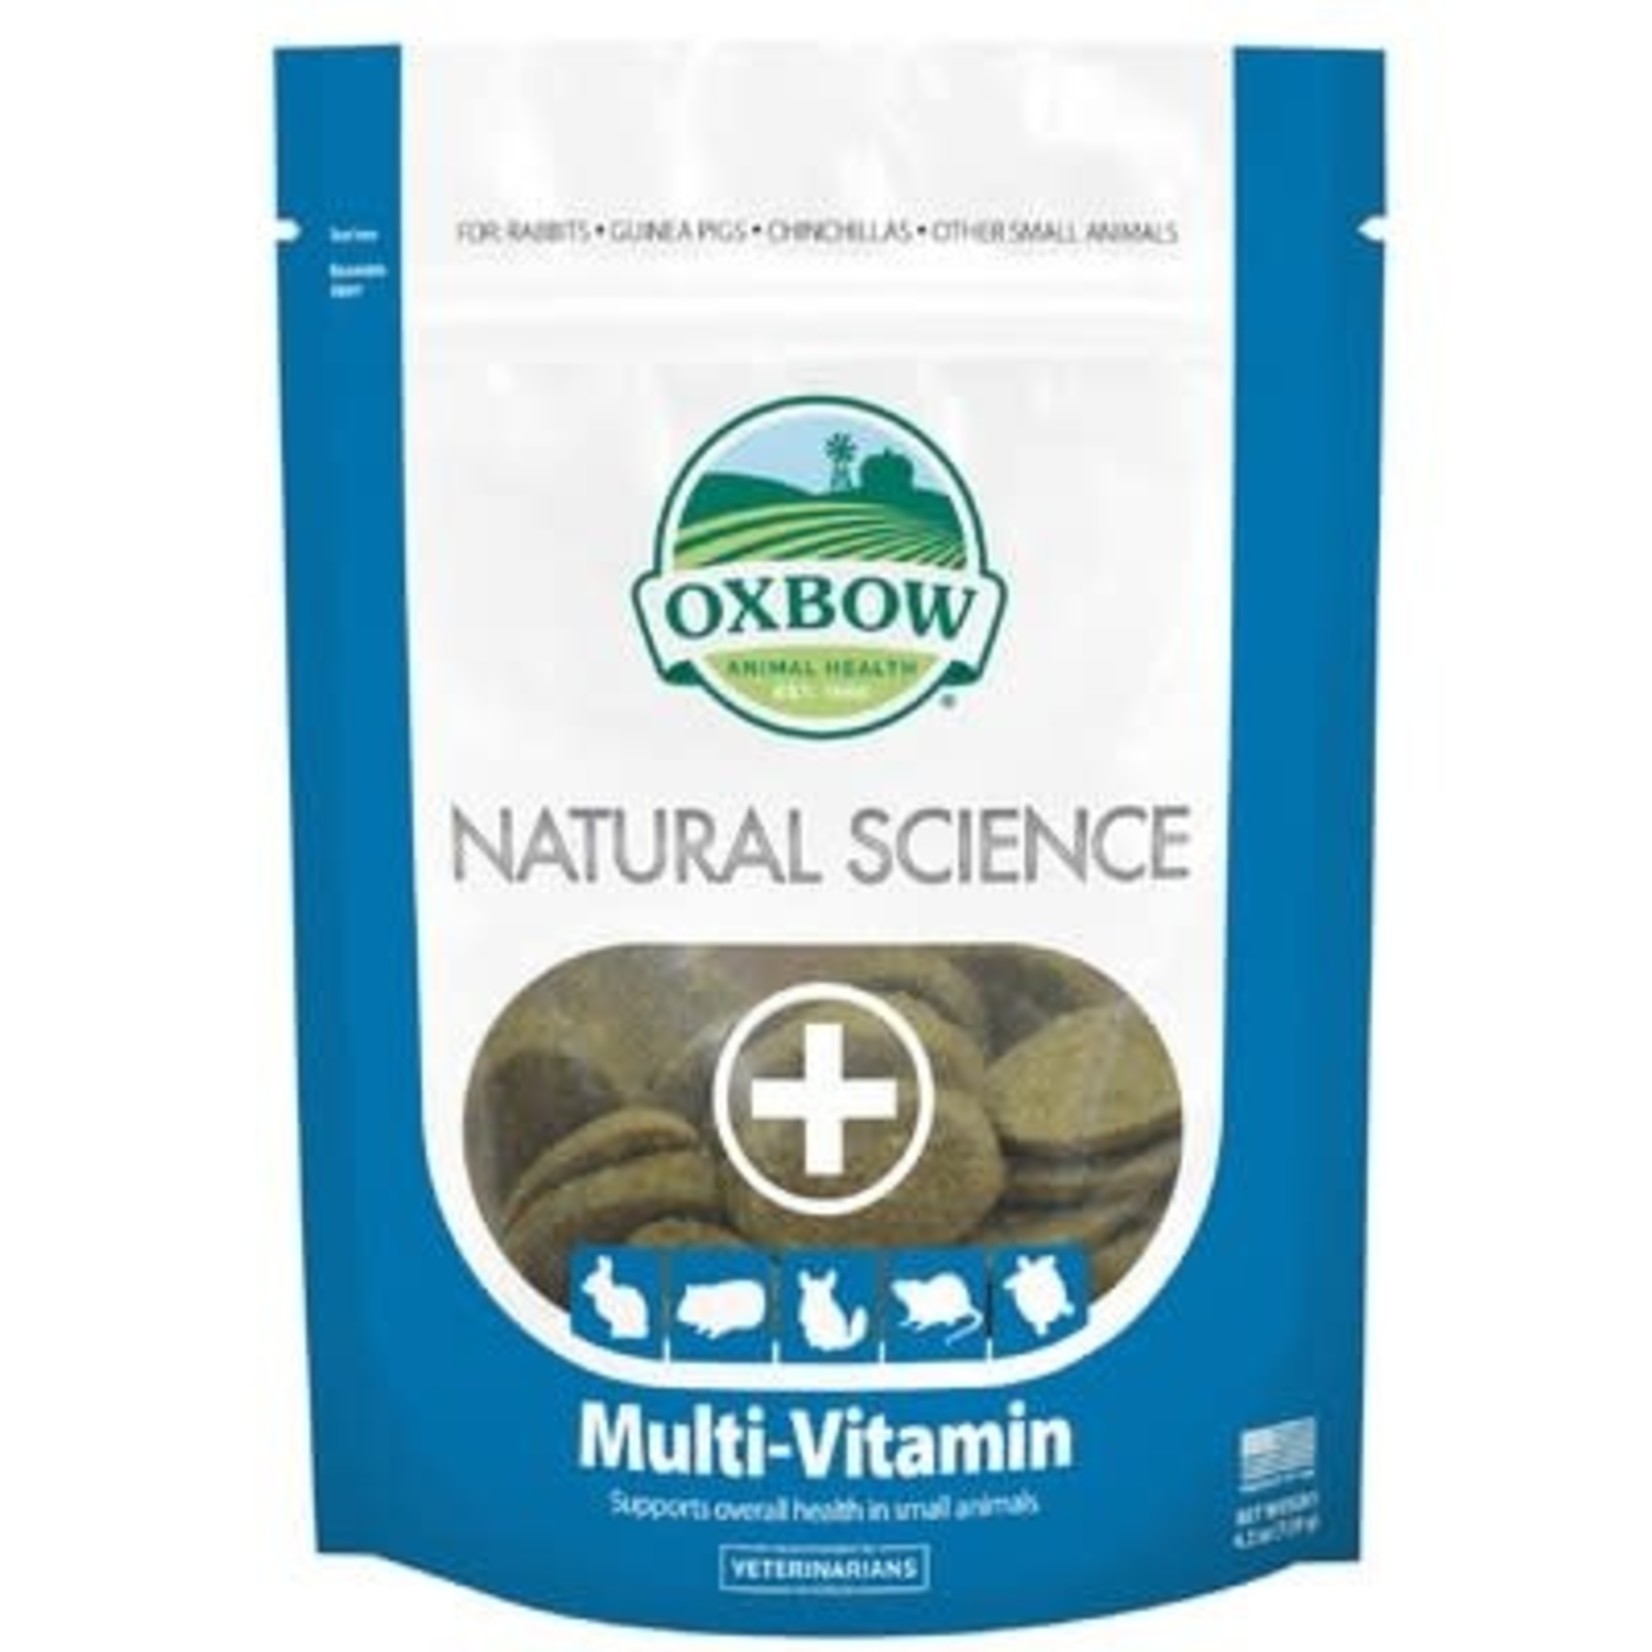 OXBOW ANIMAL HEALTH Oxbow Multivitamin 60 ct